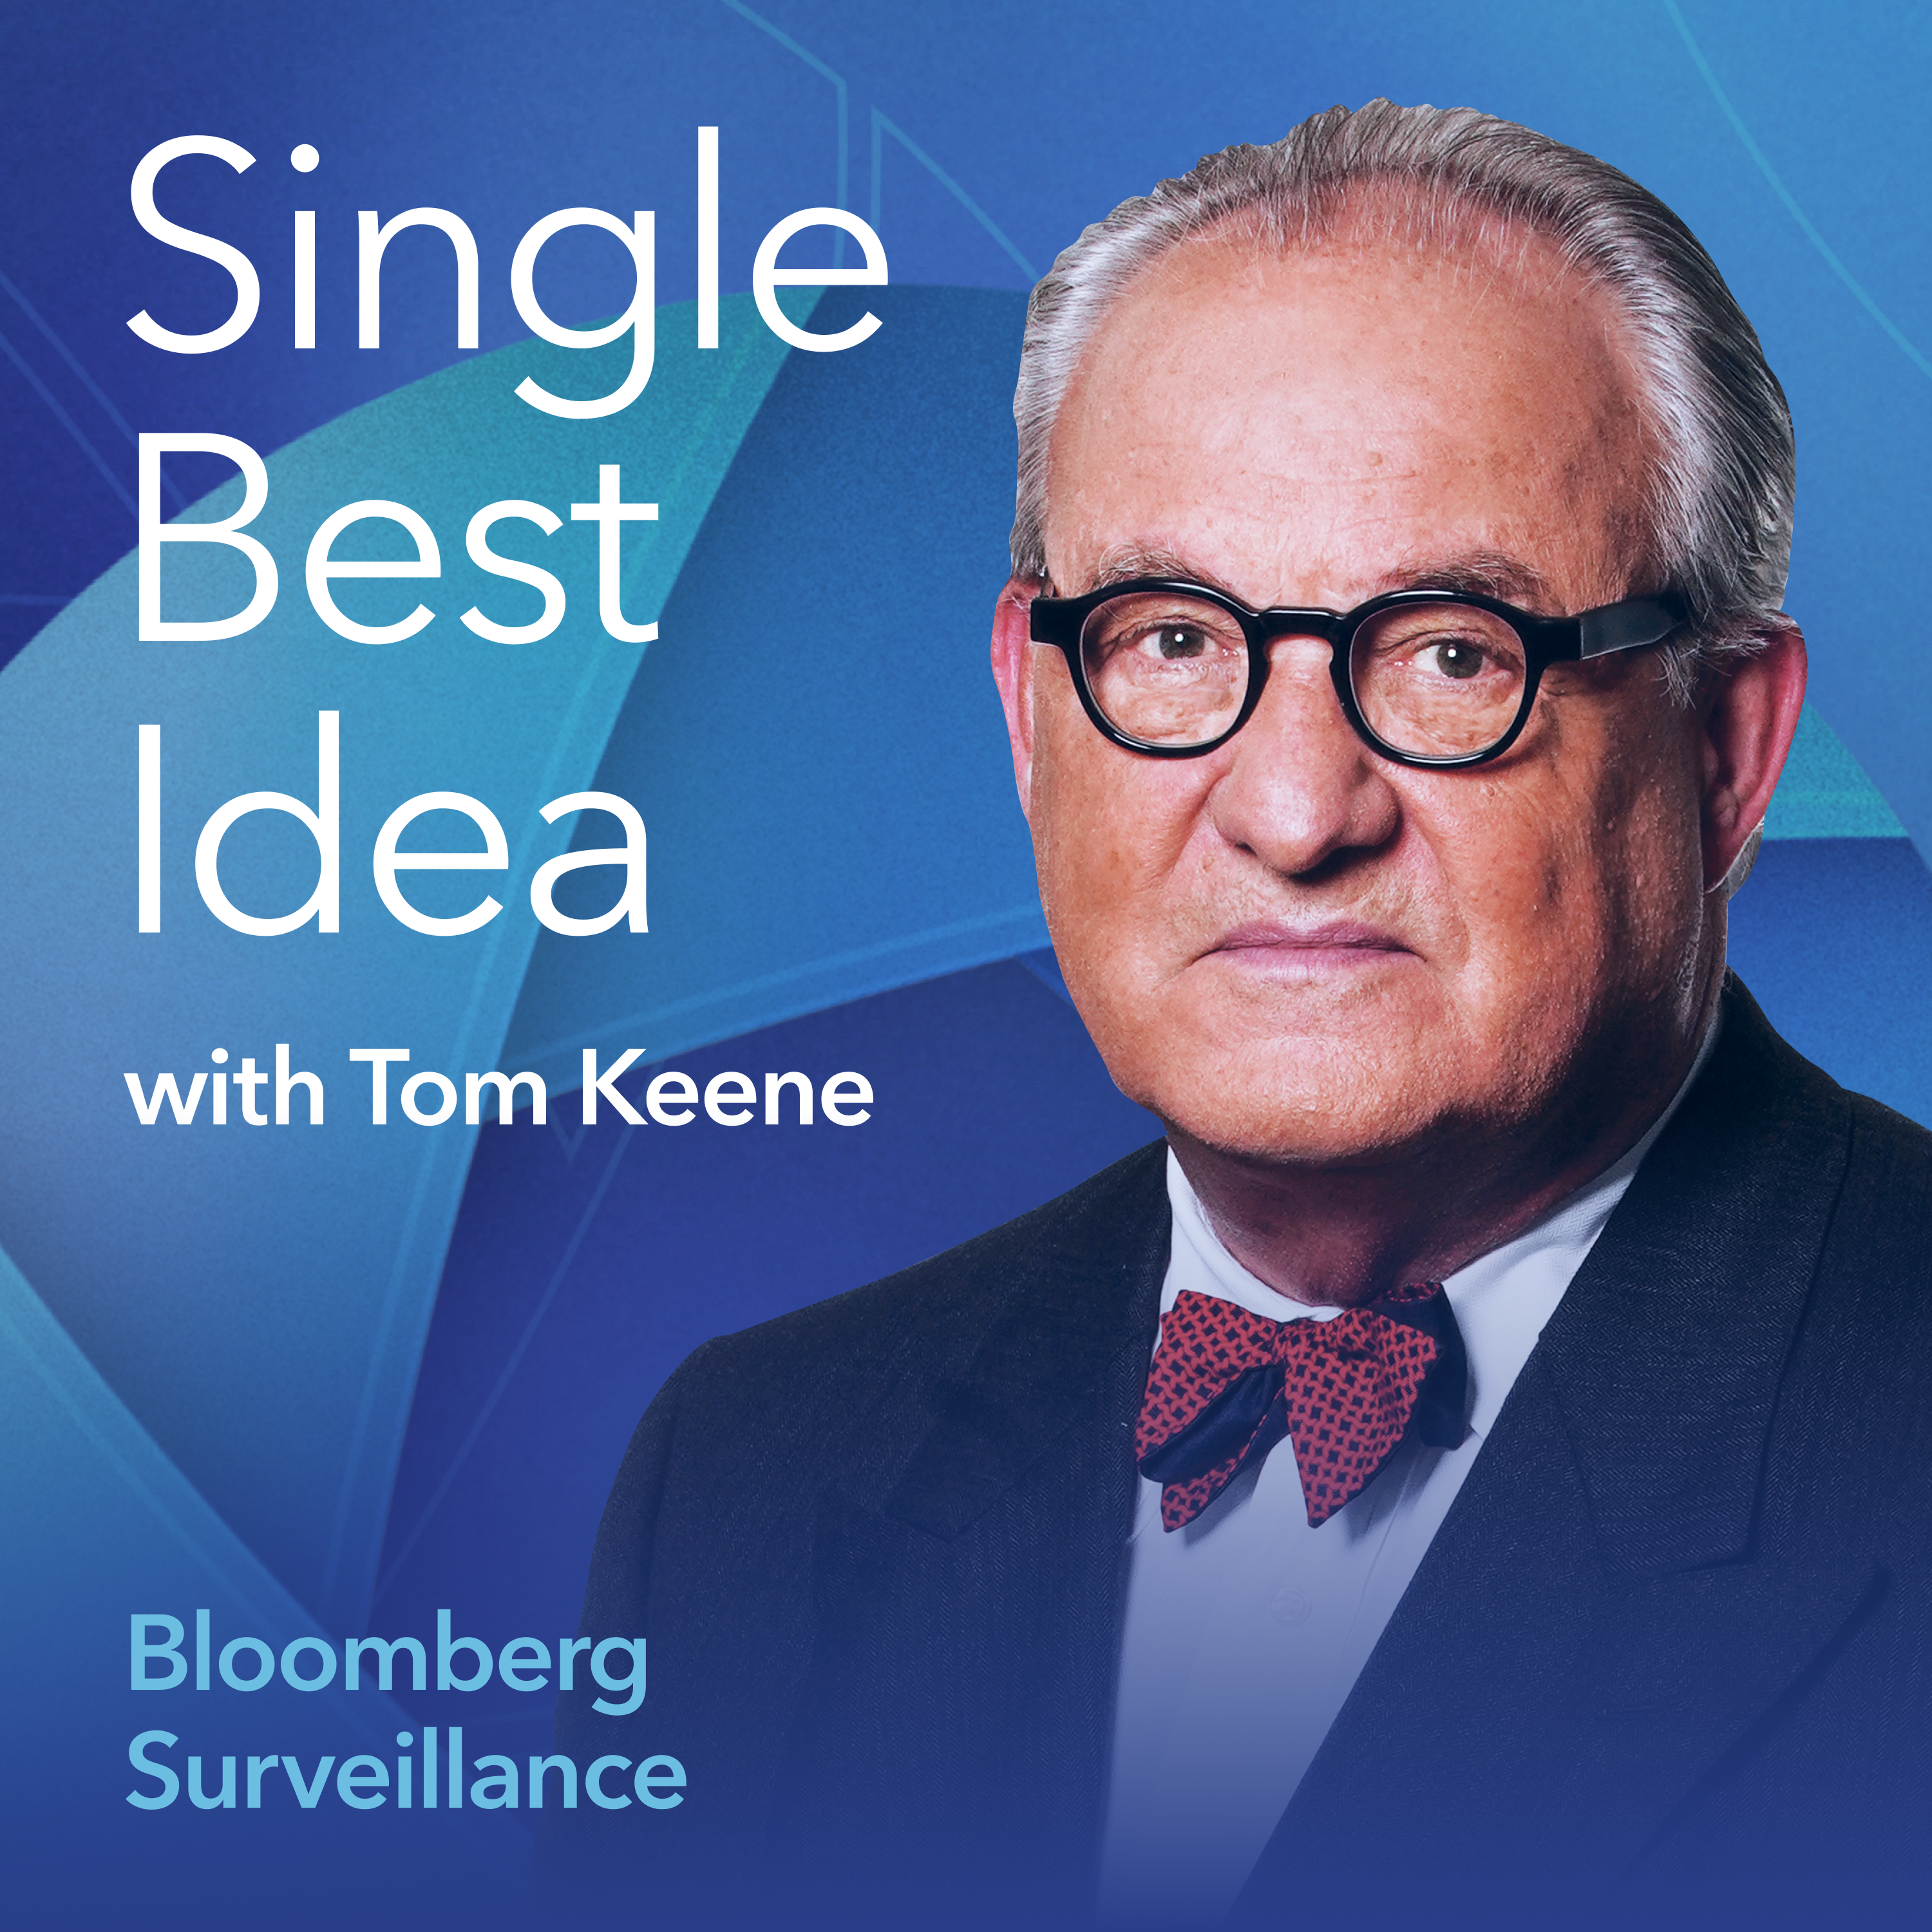 Single Best Idea with Tom Keene: Jim Bianco & Craig Sterling